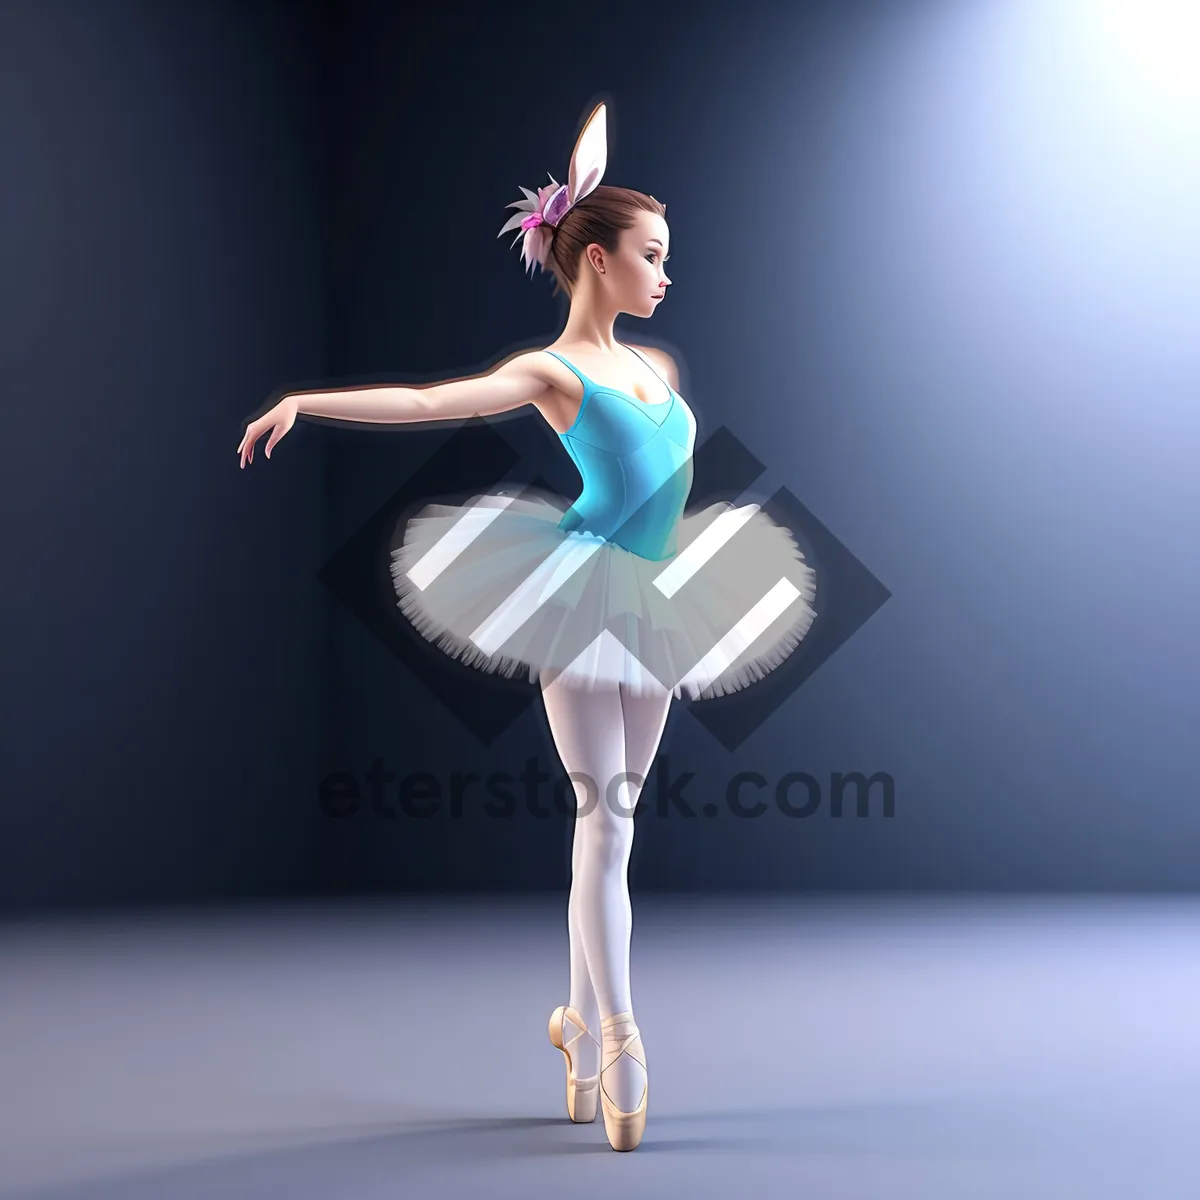 Picture of Graceful ballet dancer showcasing elegant dance moves.